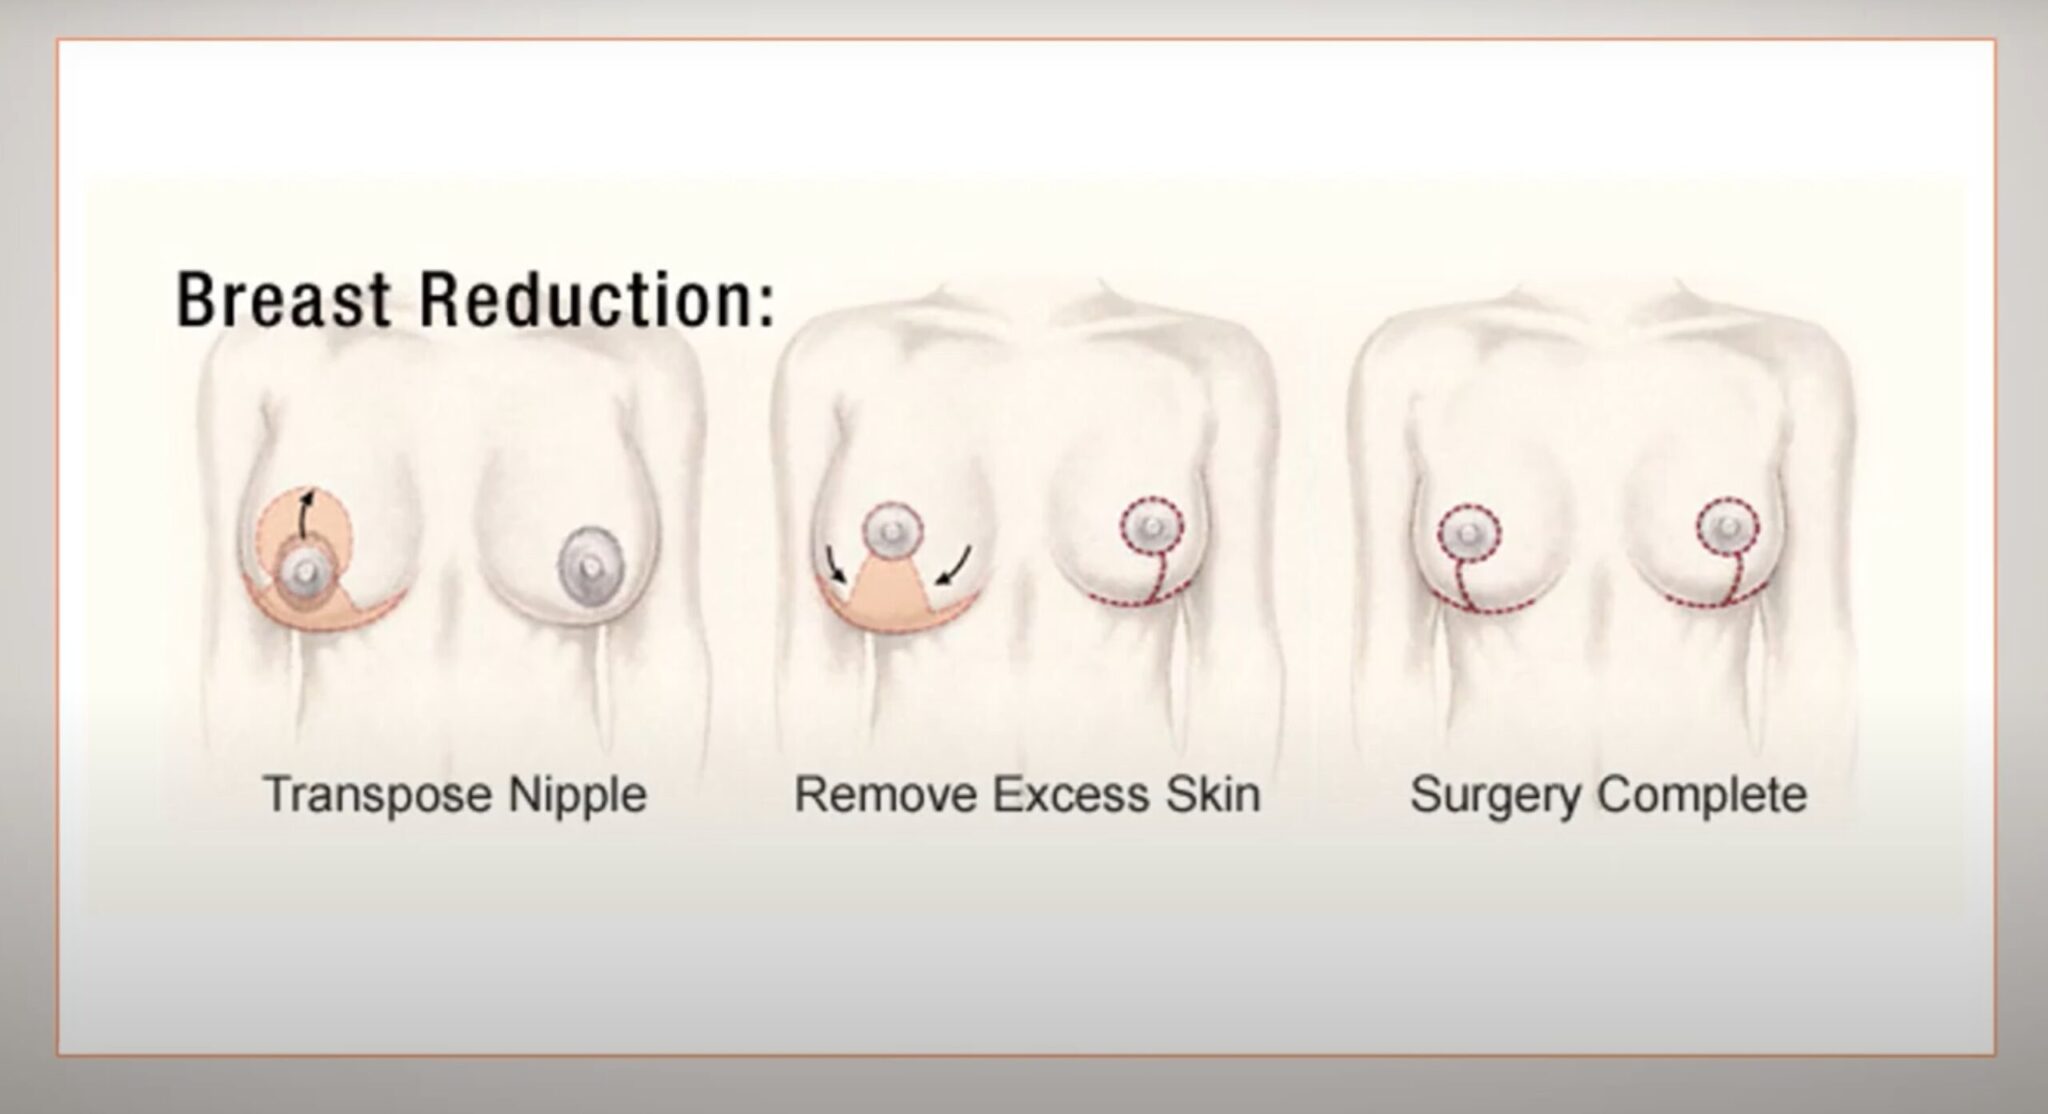 Boob reduction surgery